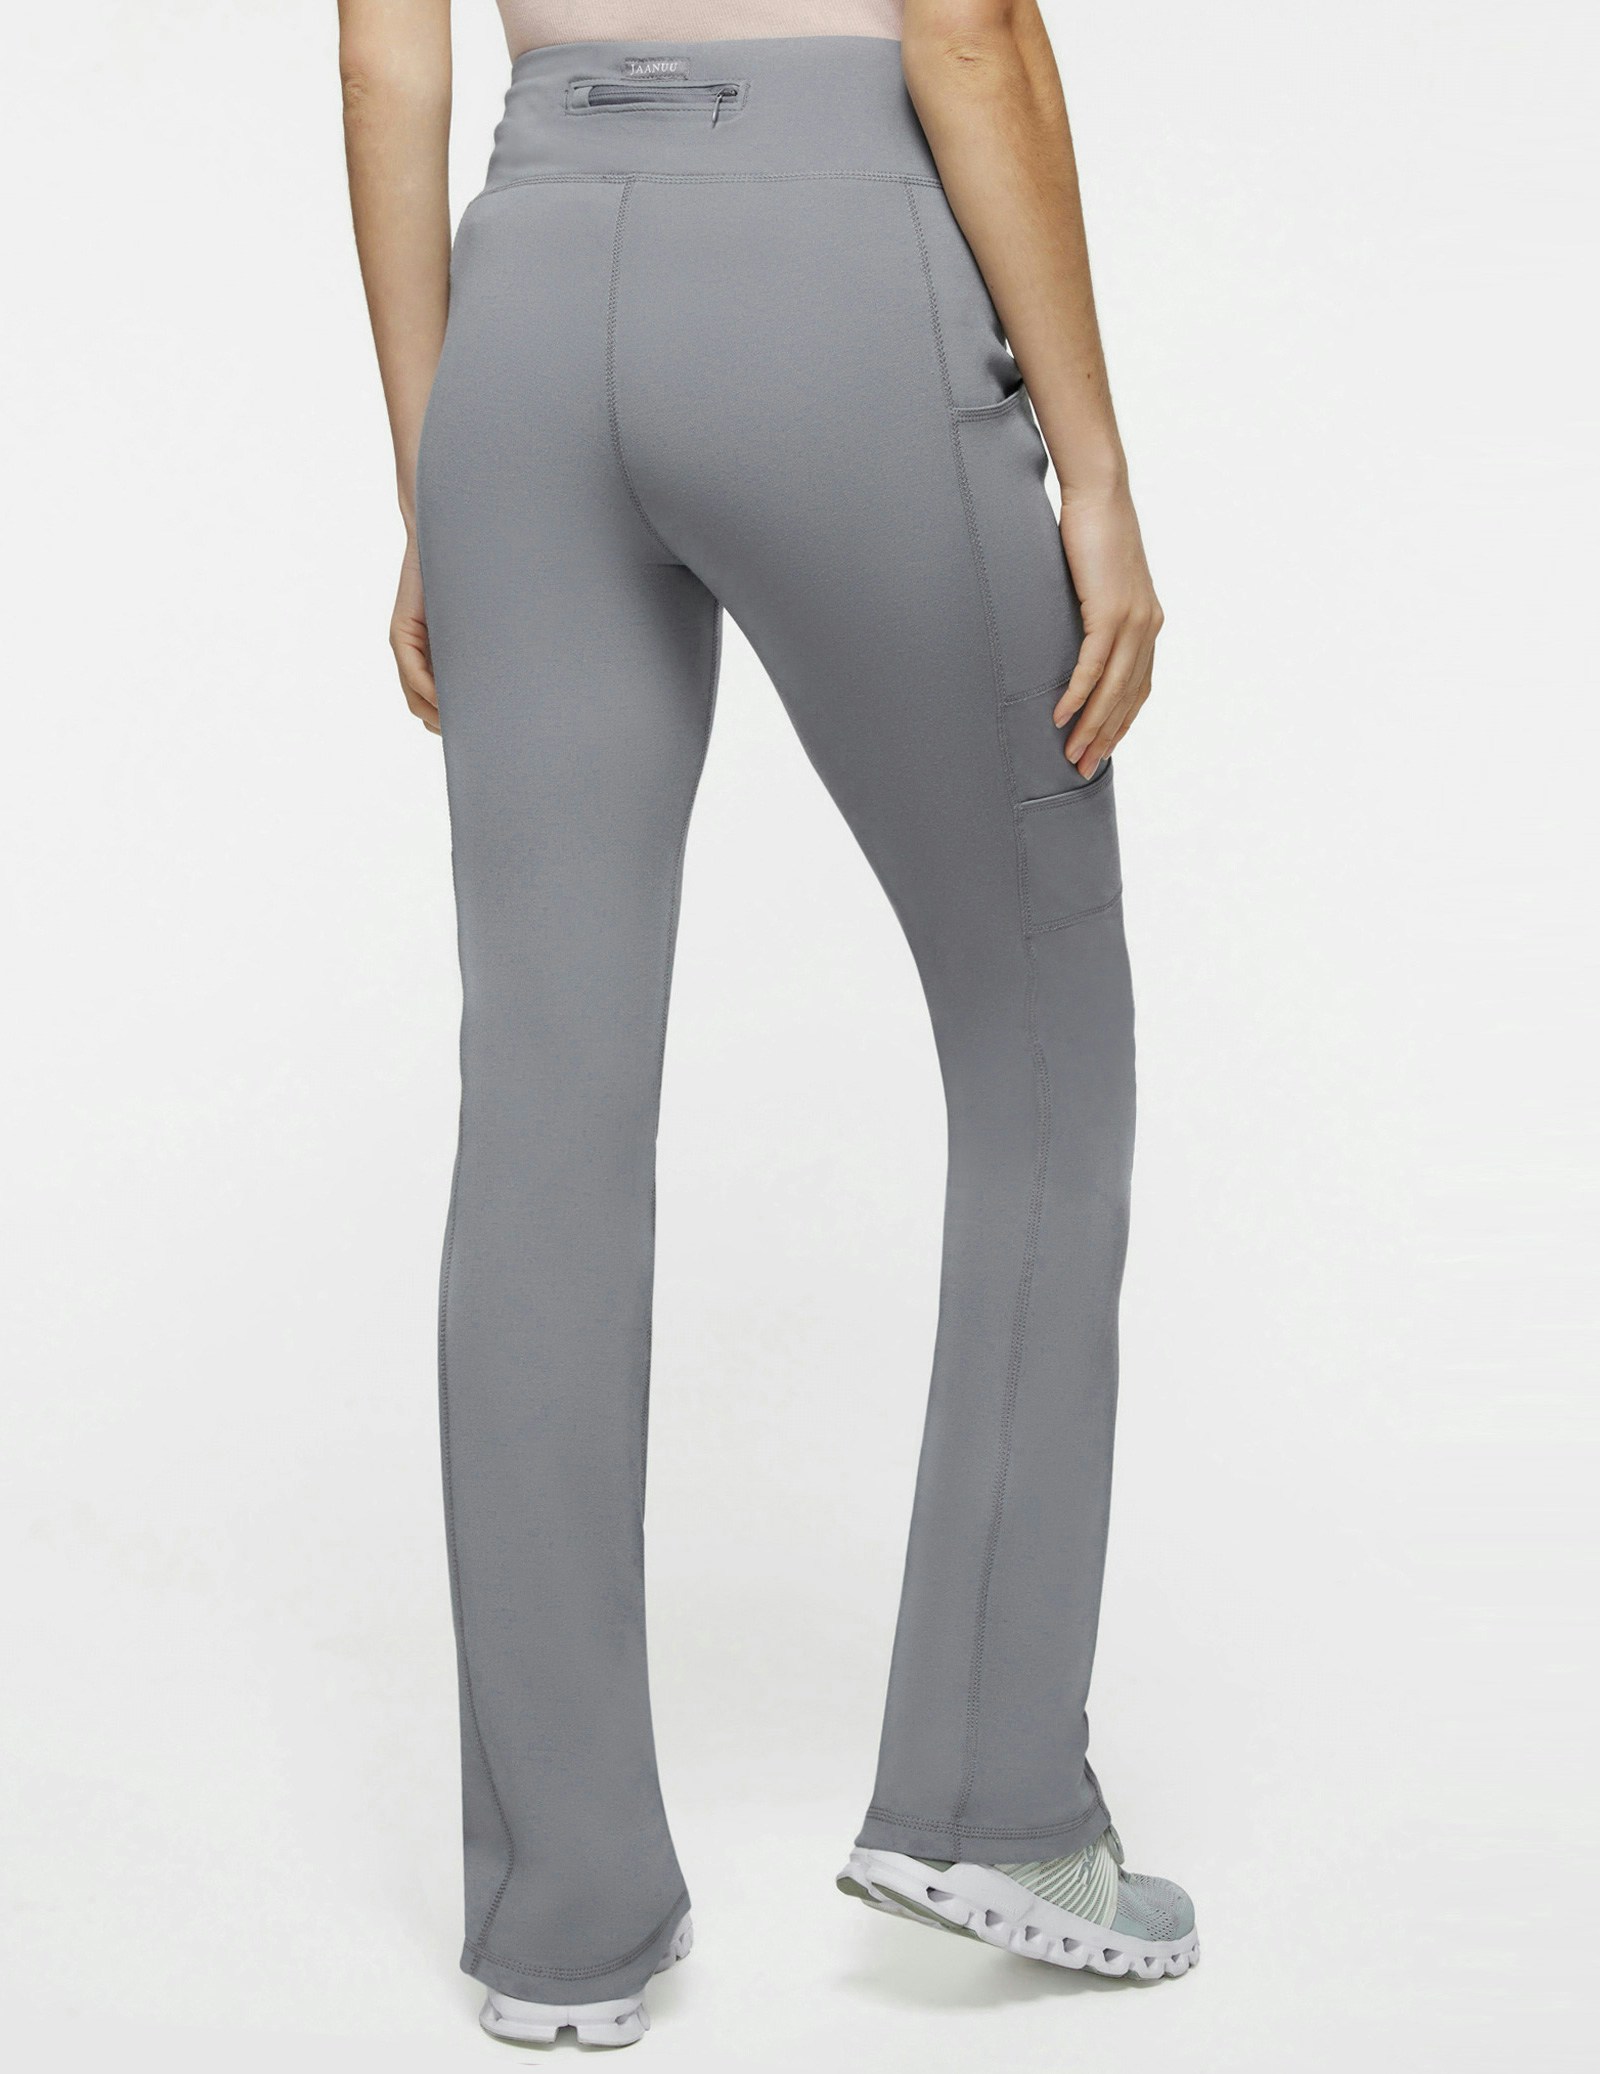 Women's Gray Yoga Scrub Pants | Jaanuu